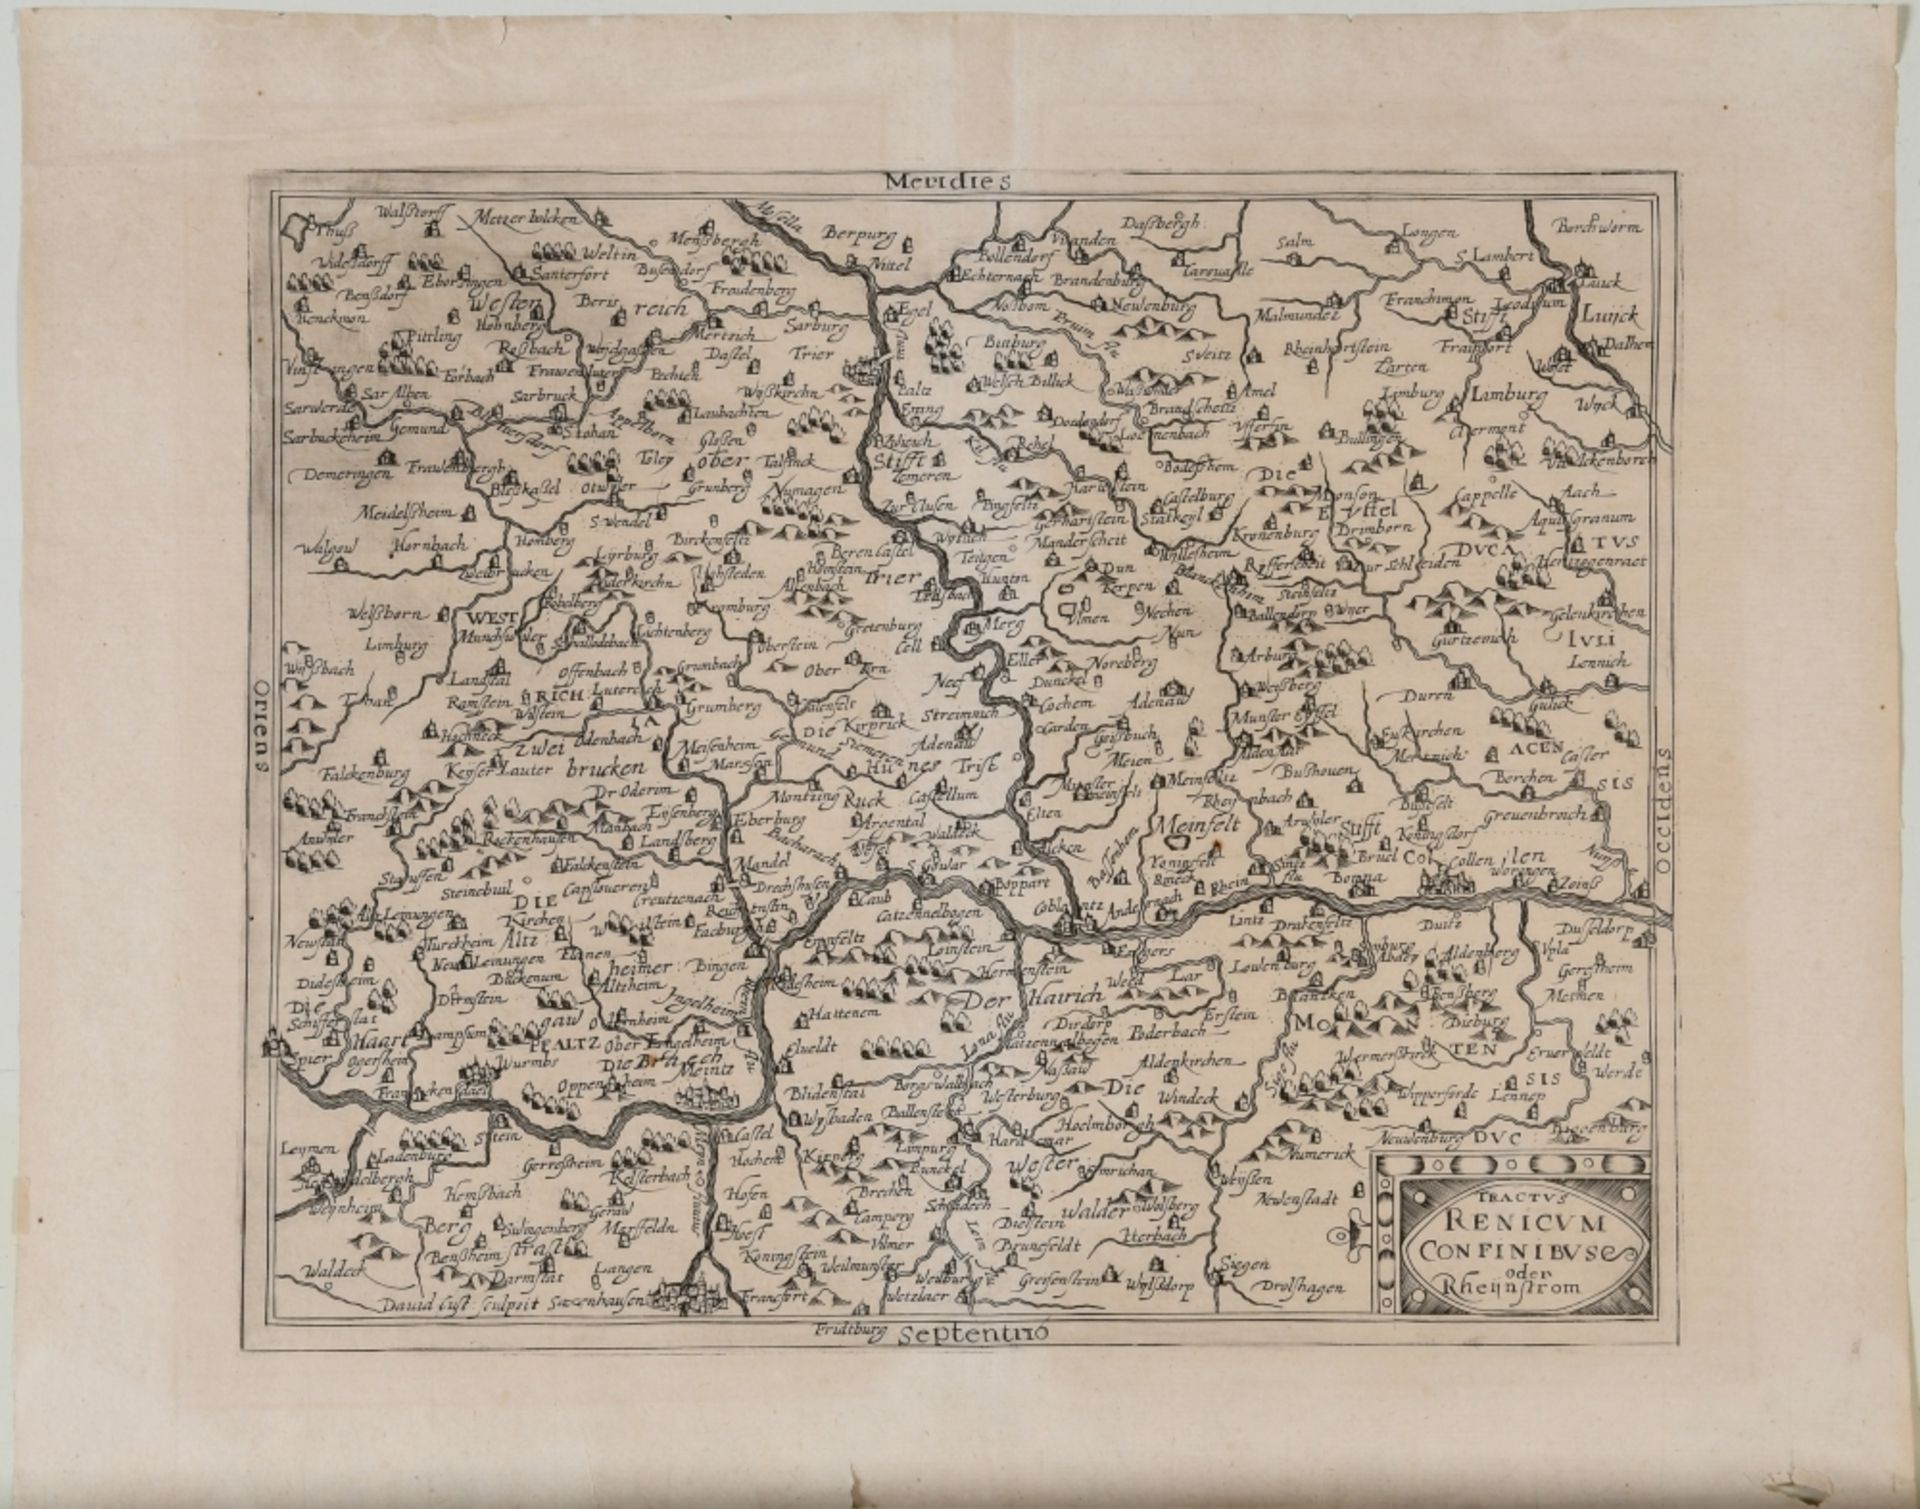 Landkarte "Tractus Renicum Confinibus oder Rheinstrom"